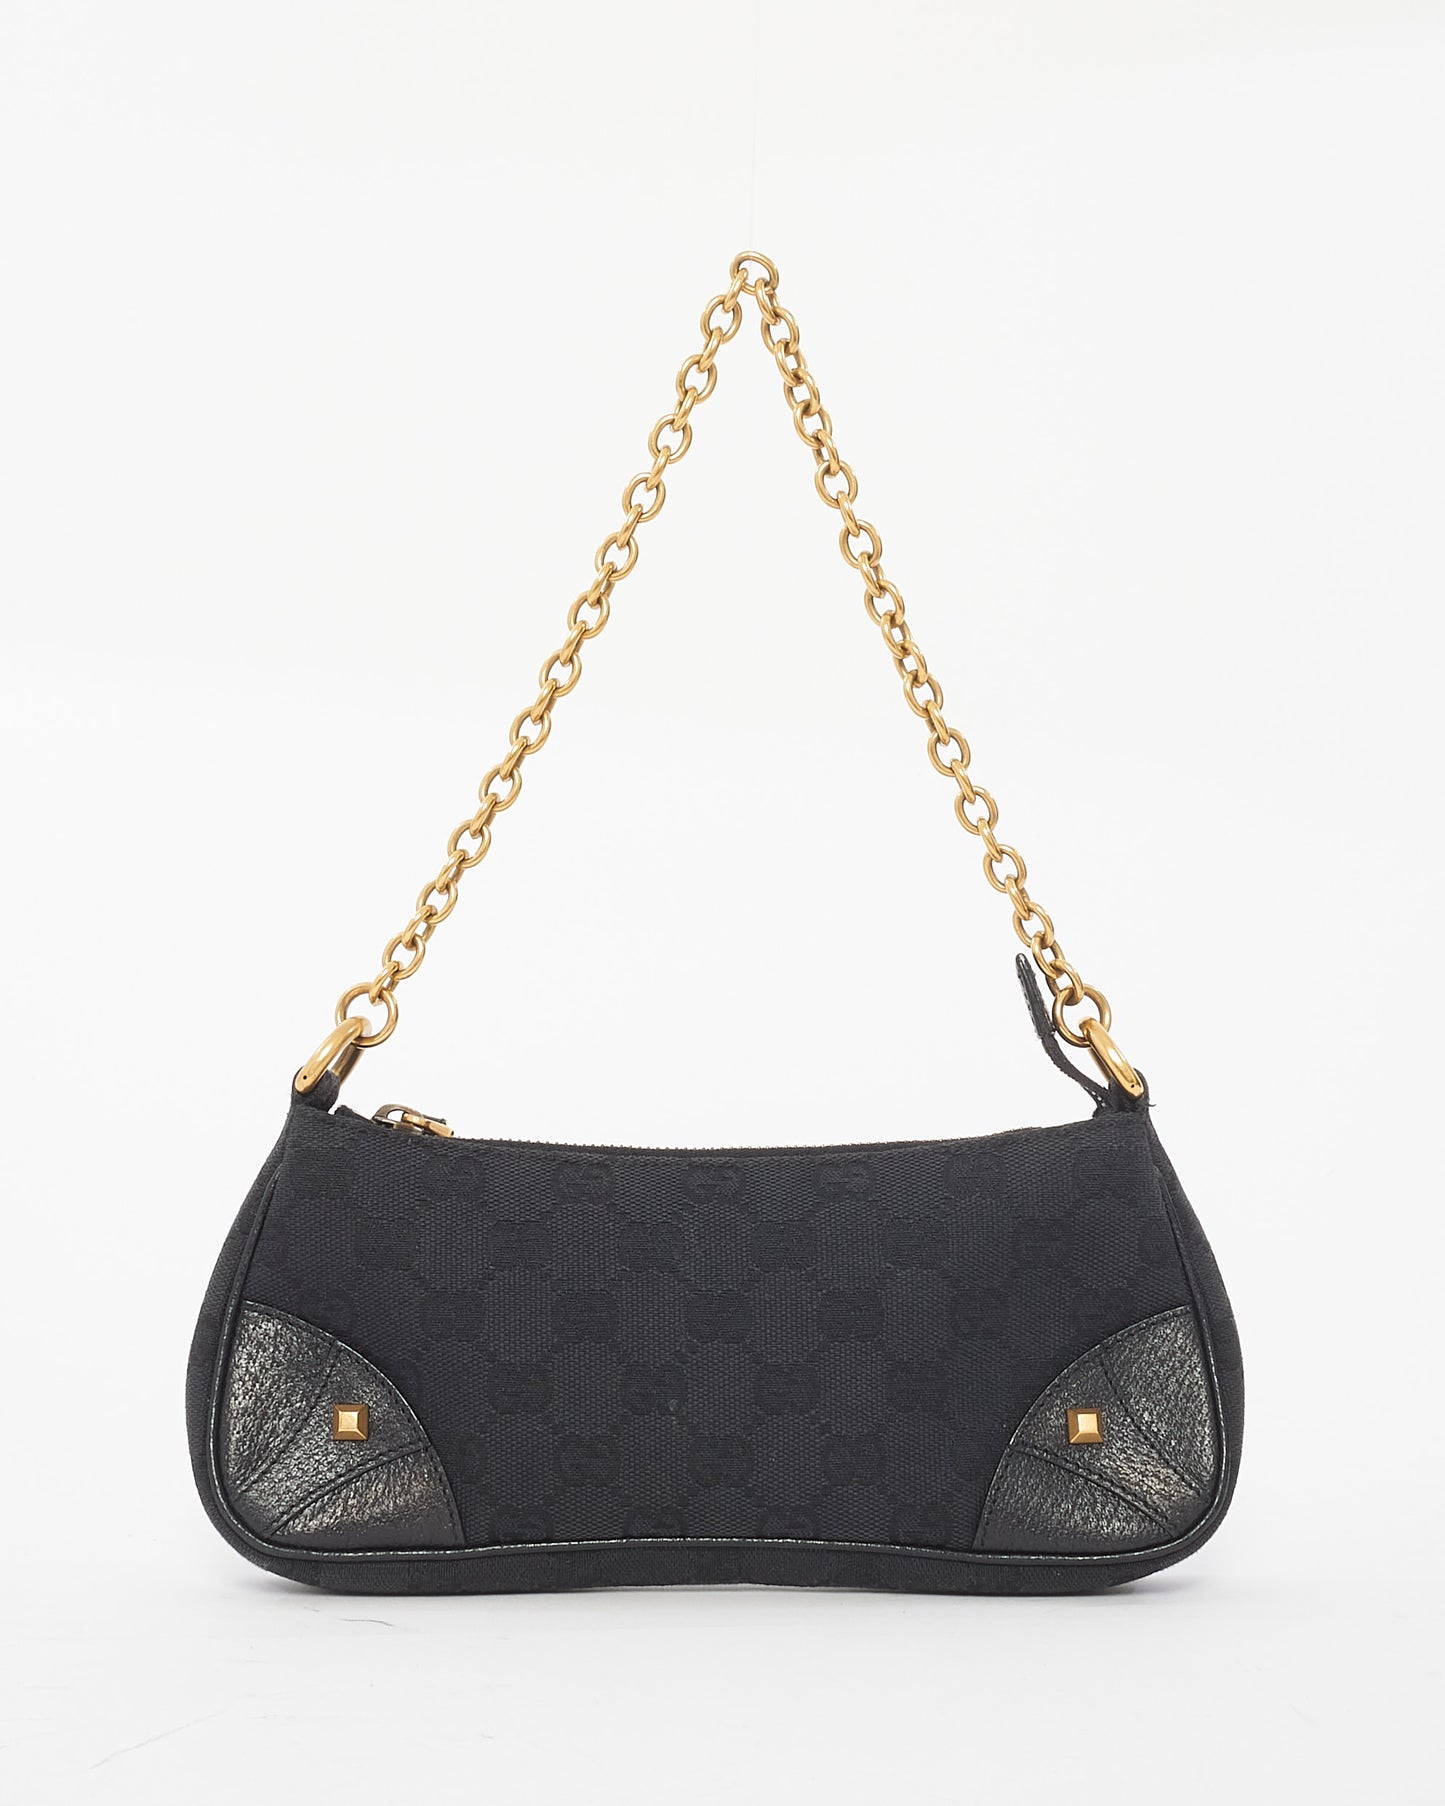 Gucci Black Canvas & Gold Chain Shoulder Bag